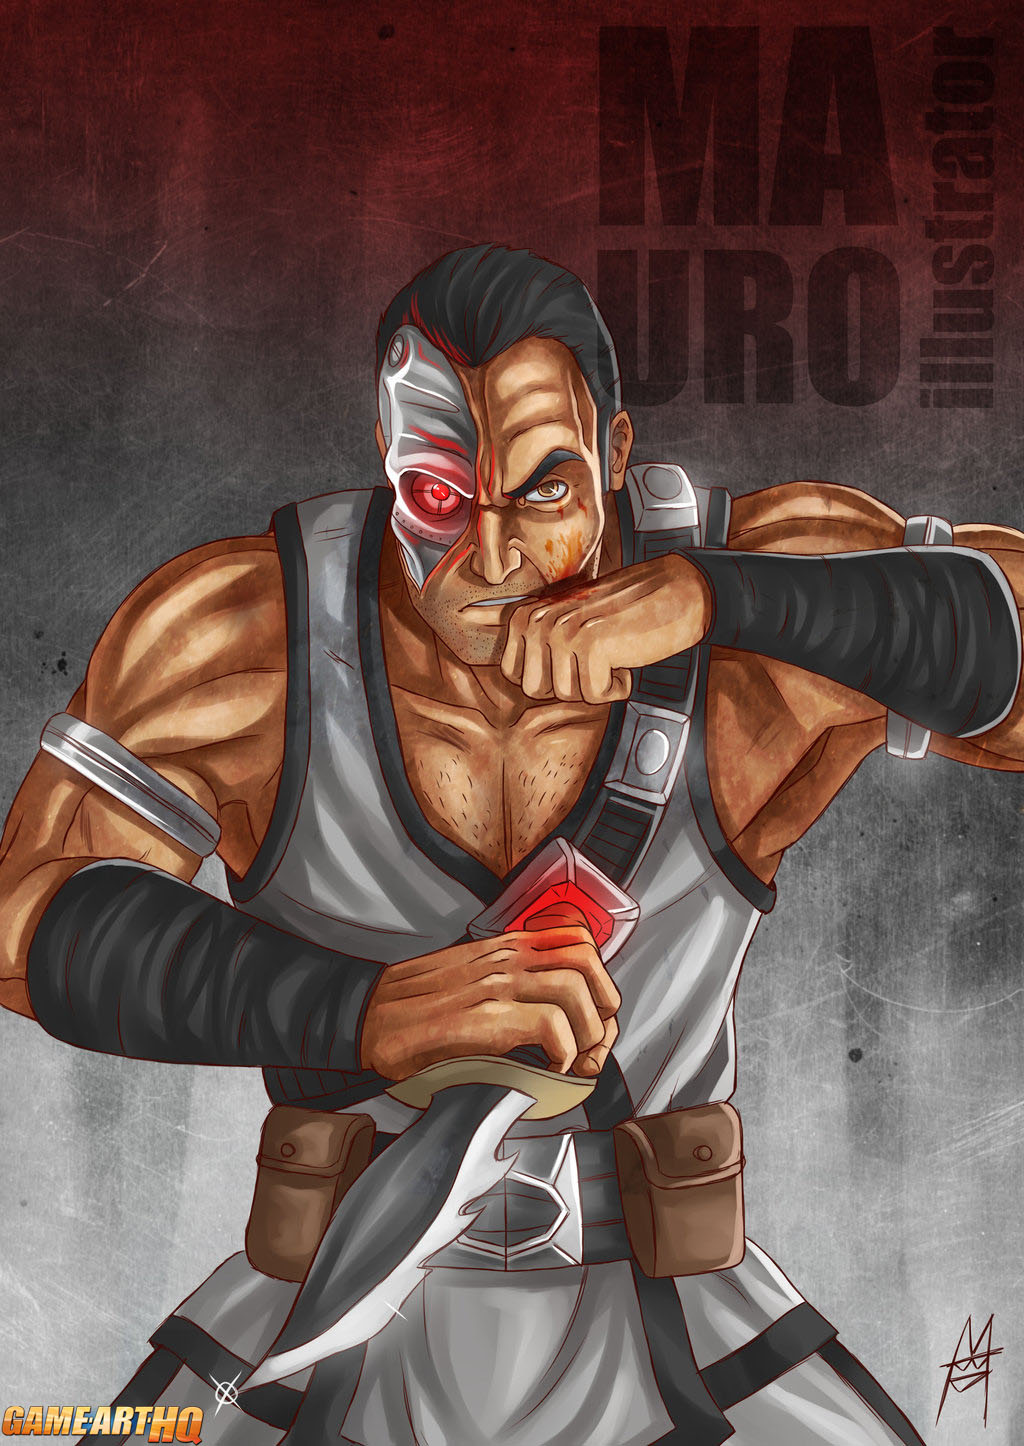 MK Art Tribute: Kano from Mortal Kombat